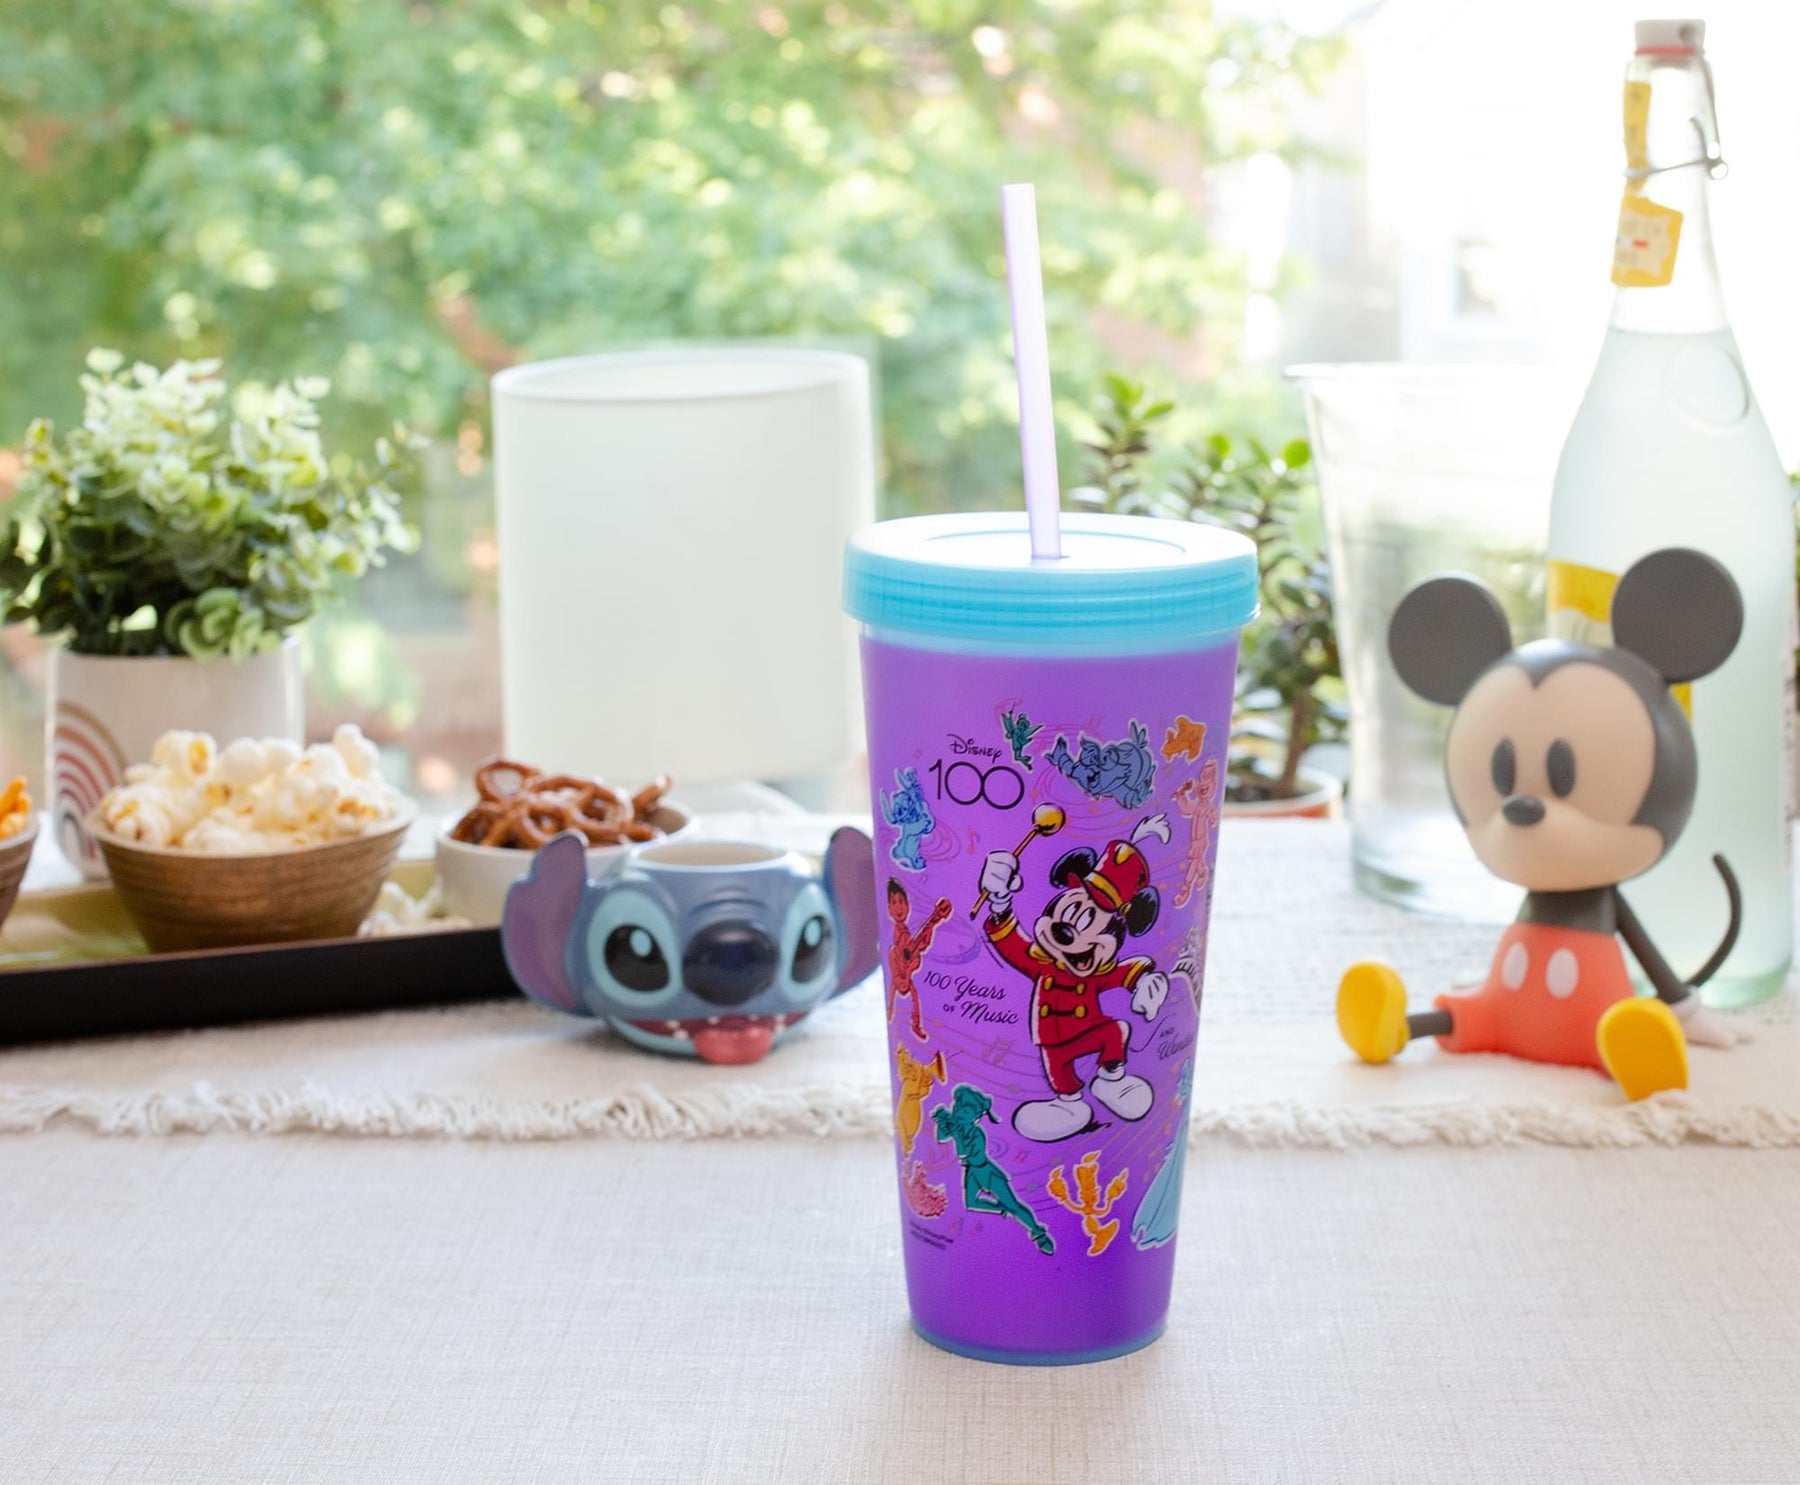 Check Out This Amazing Disney100 Travel Mug! 